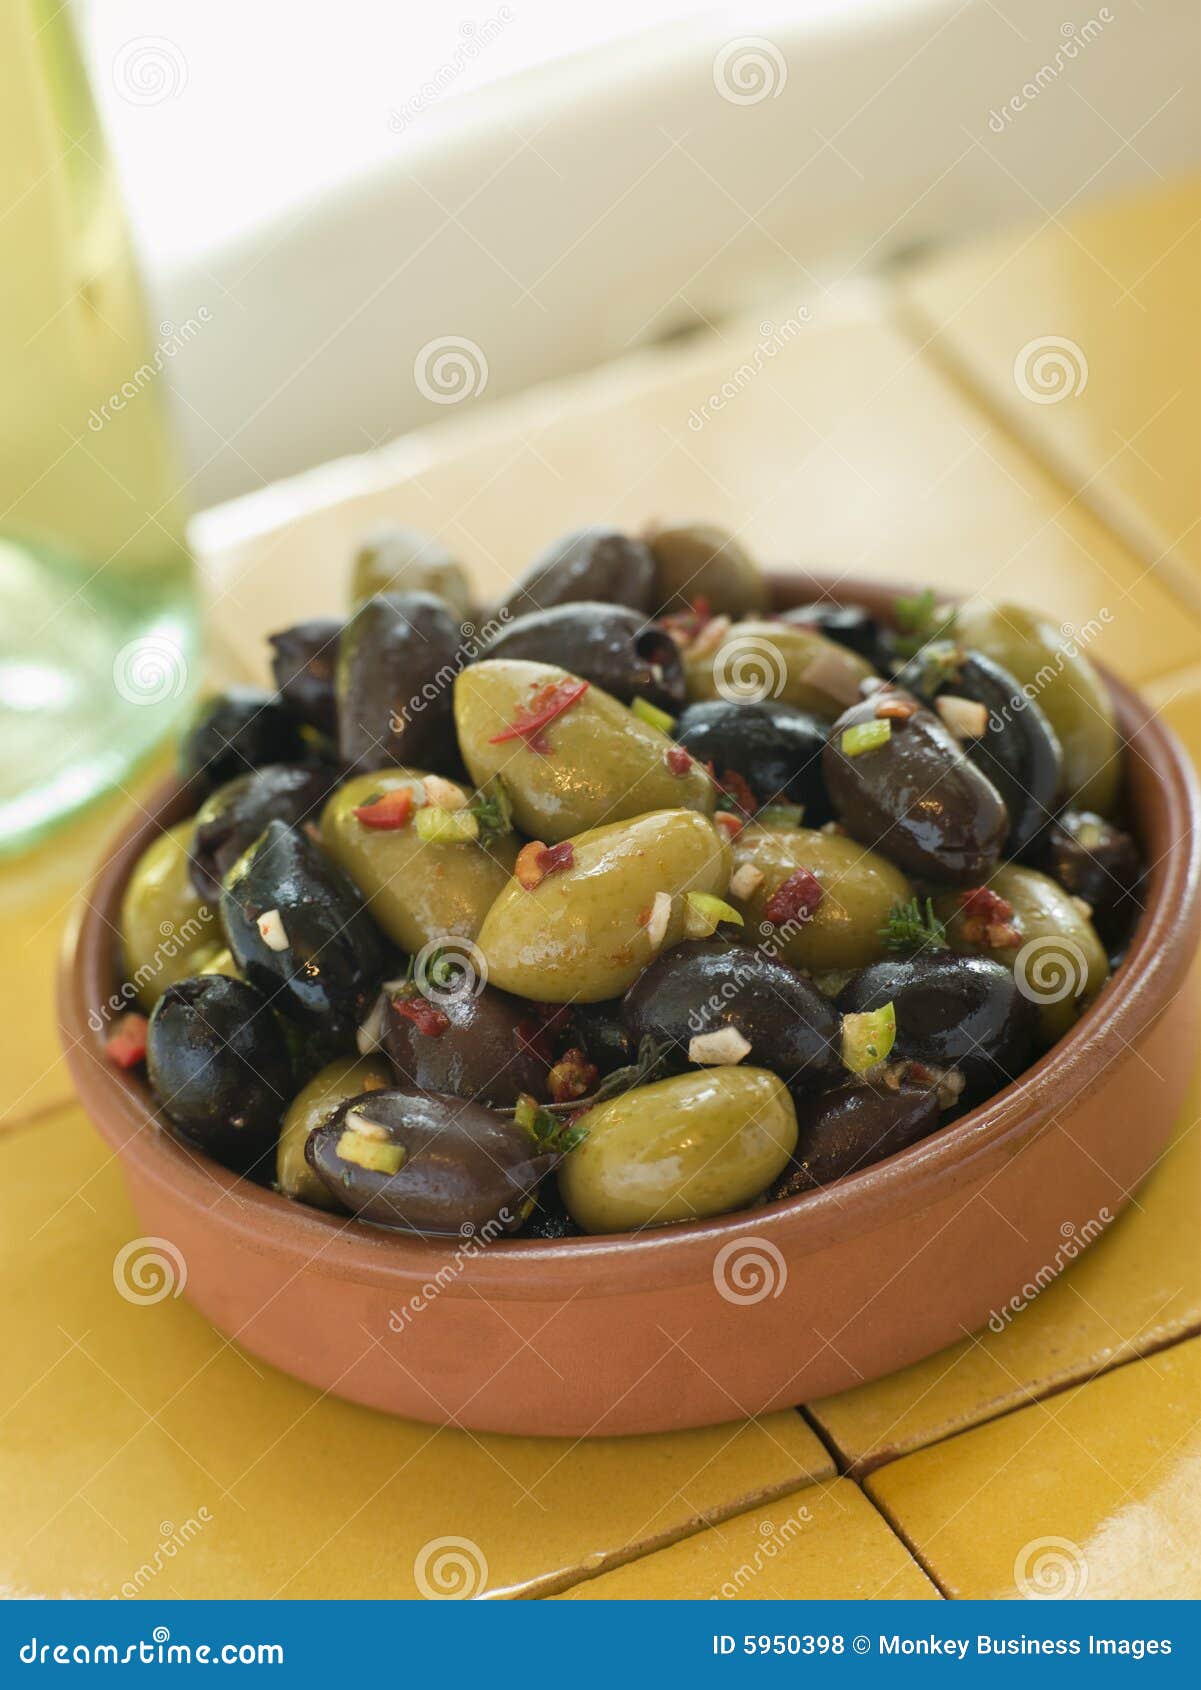 dish of mixed marinated olives